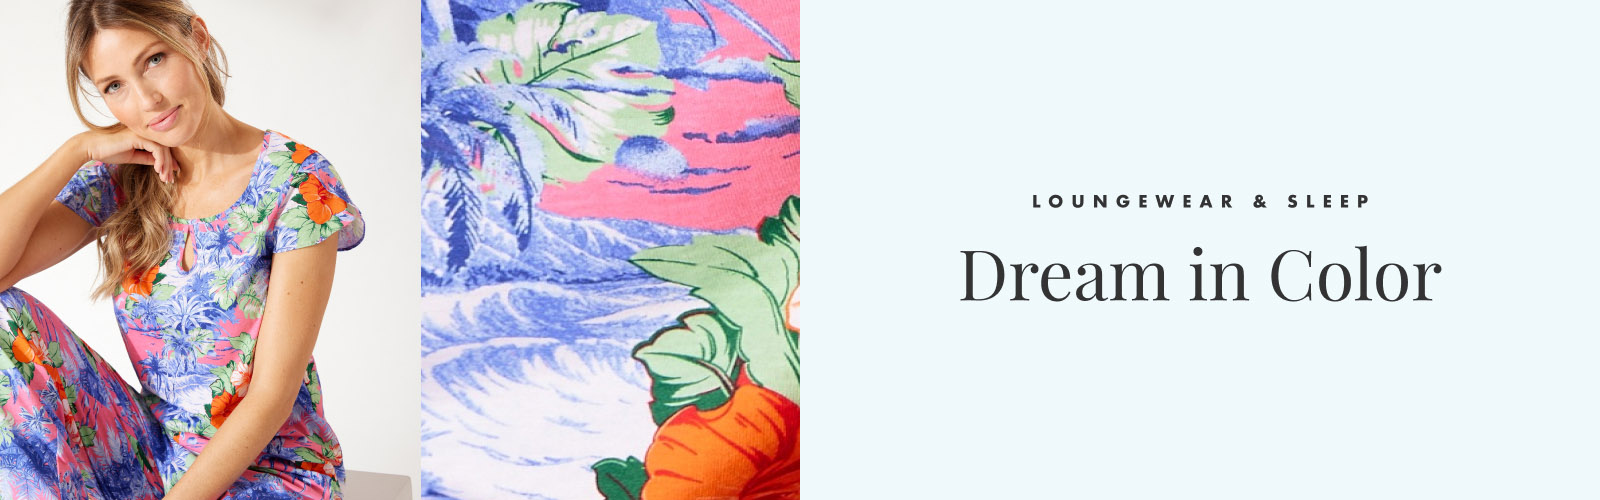 Loungewear & Sleep - Dream in Color